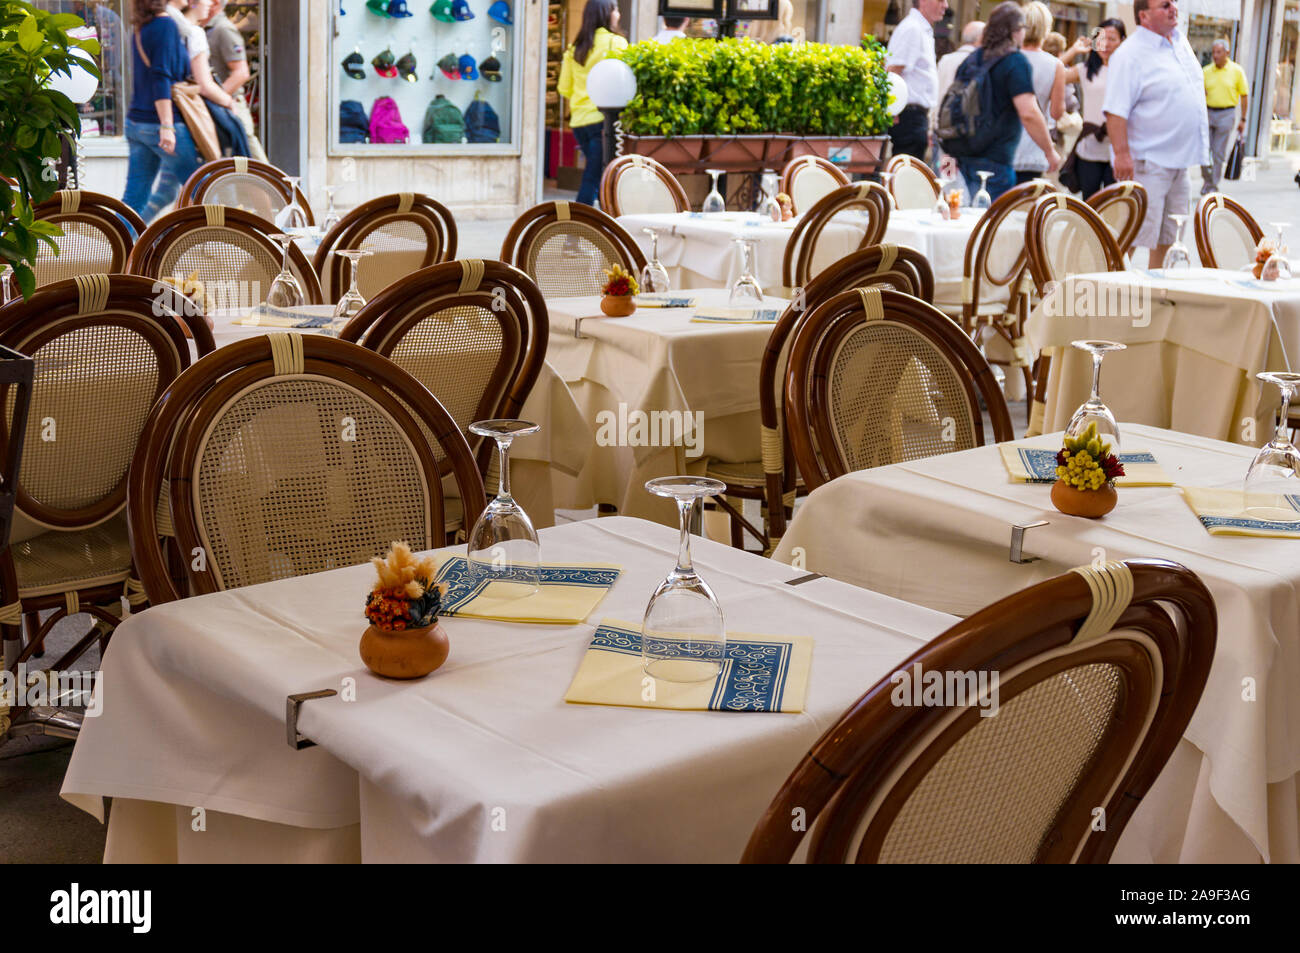 Venice, Italy - September 27, 2013: Tables set for al fresco dining restaurant in Venice Stock Photo